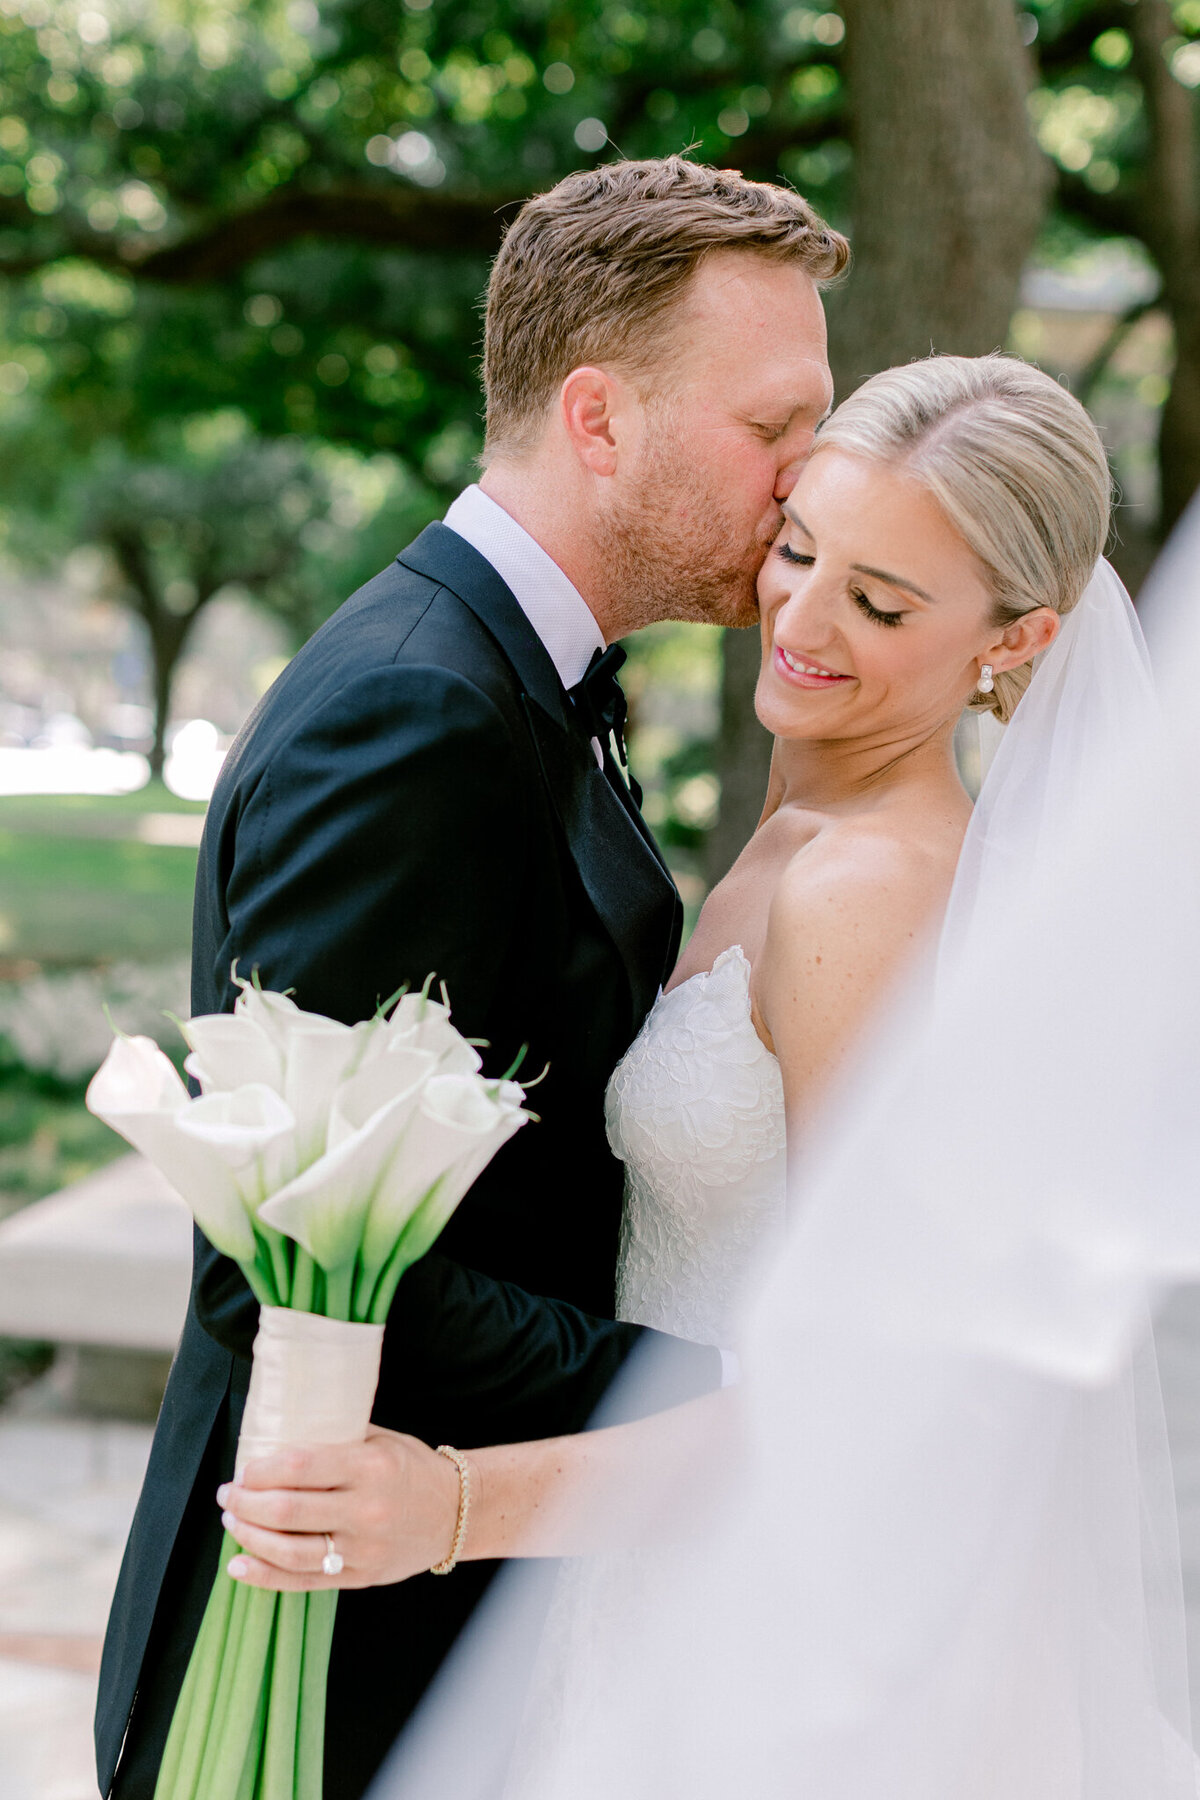 Katelyn & Kyle's Wedding at the Adolphus Hotel | Dallas Wedding Photographer | Sami Kathryn Photography-226